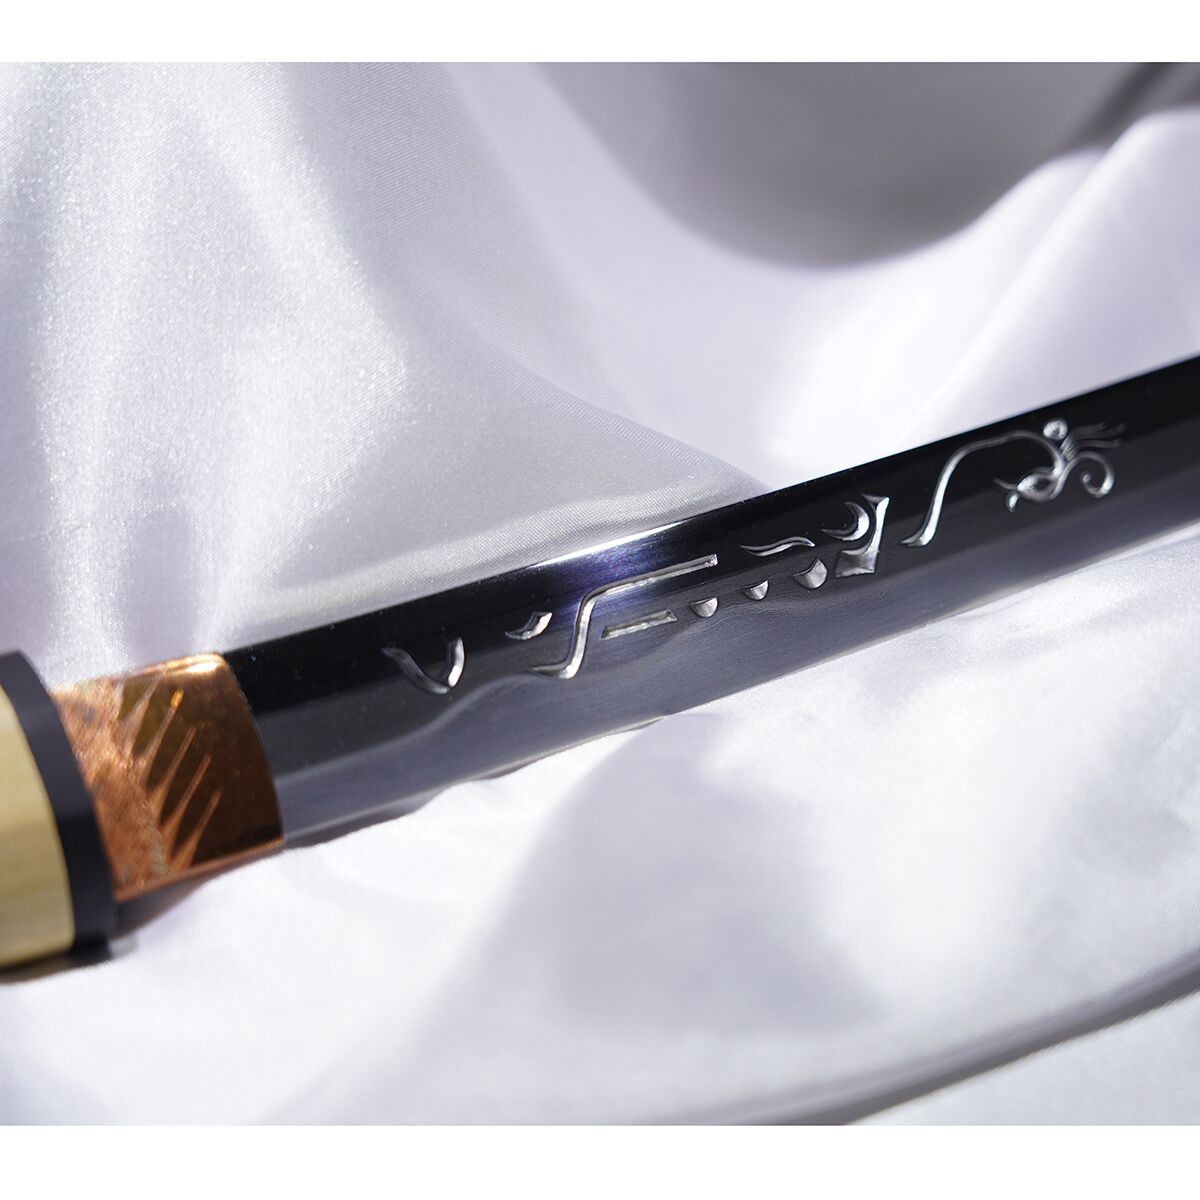 Muramasa Katana Sword Replica - Wicked sword for sale | Samurai Sword Forge and Sale by Z-SEY